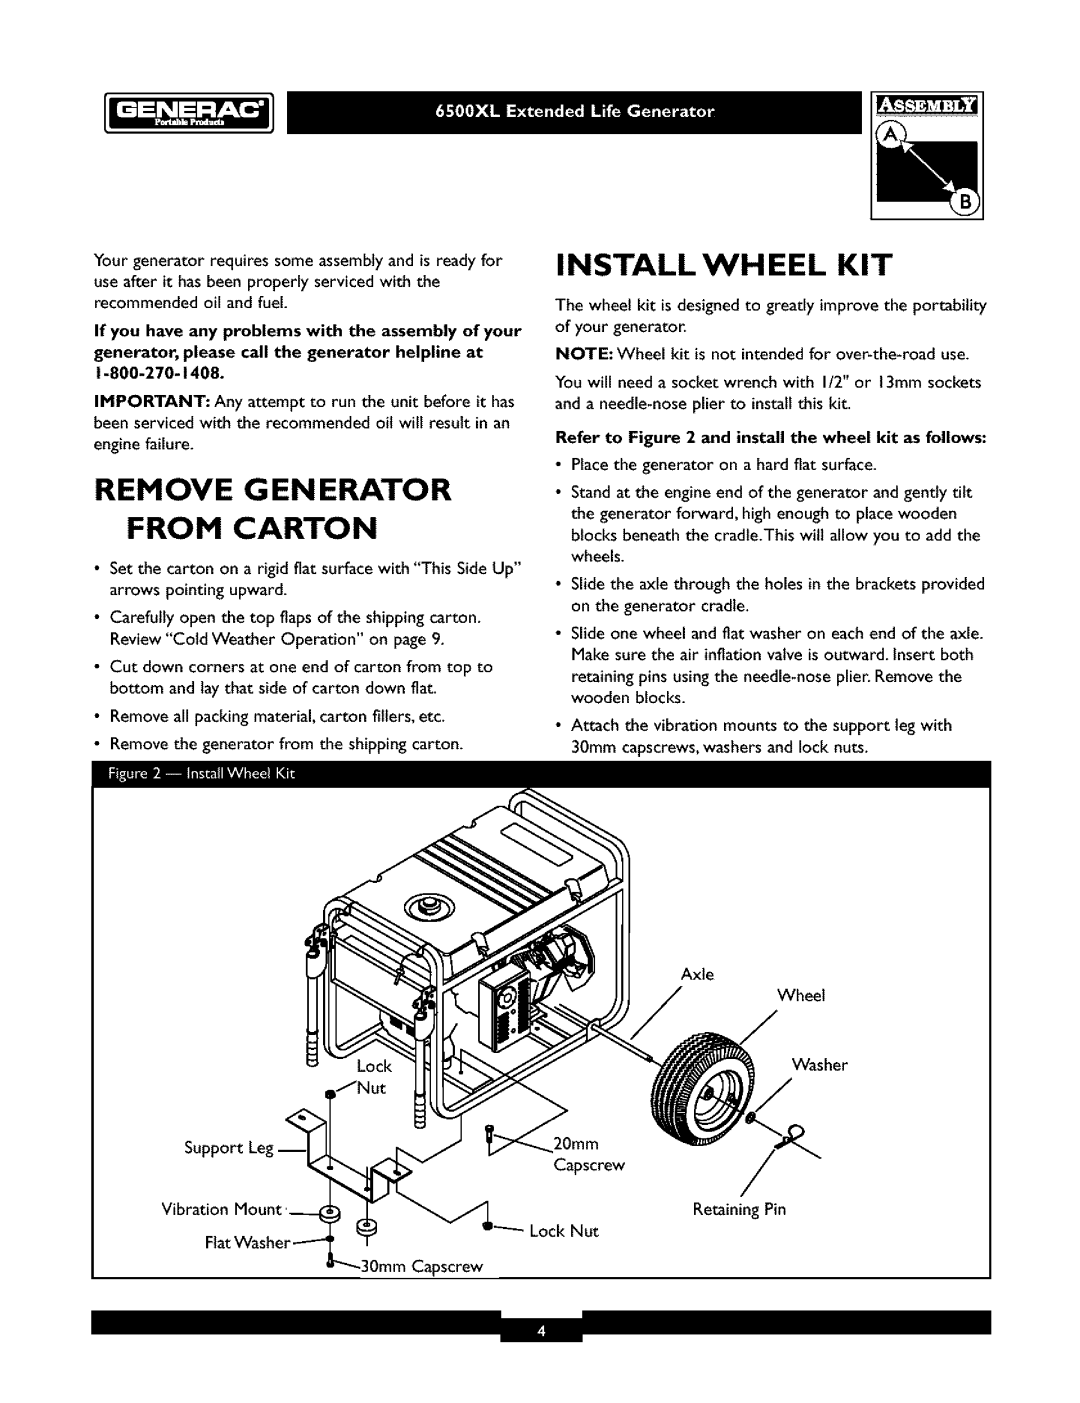 Generac 6500XL Remove G En Erator From Carton, Install Wheel Kit, Yourgeneratorrequiressomeassemblyandisreadyfor 